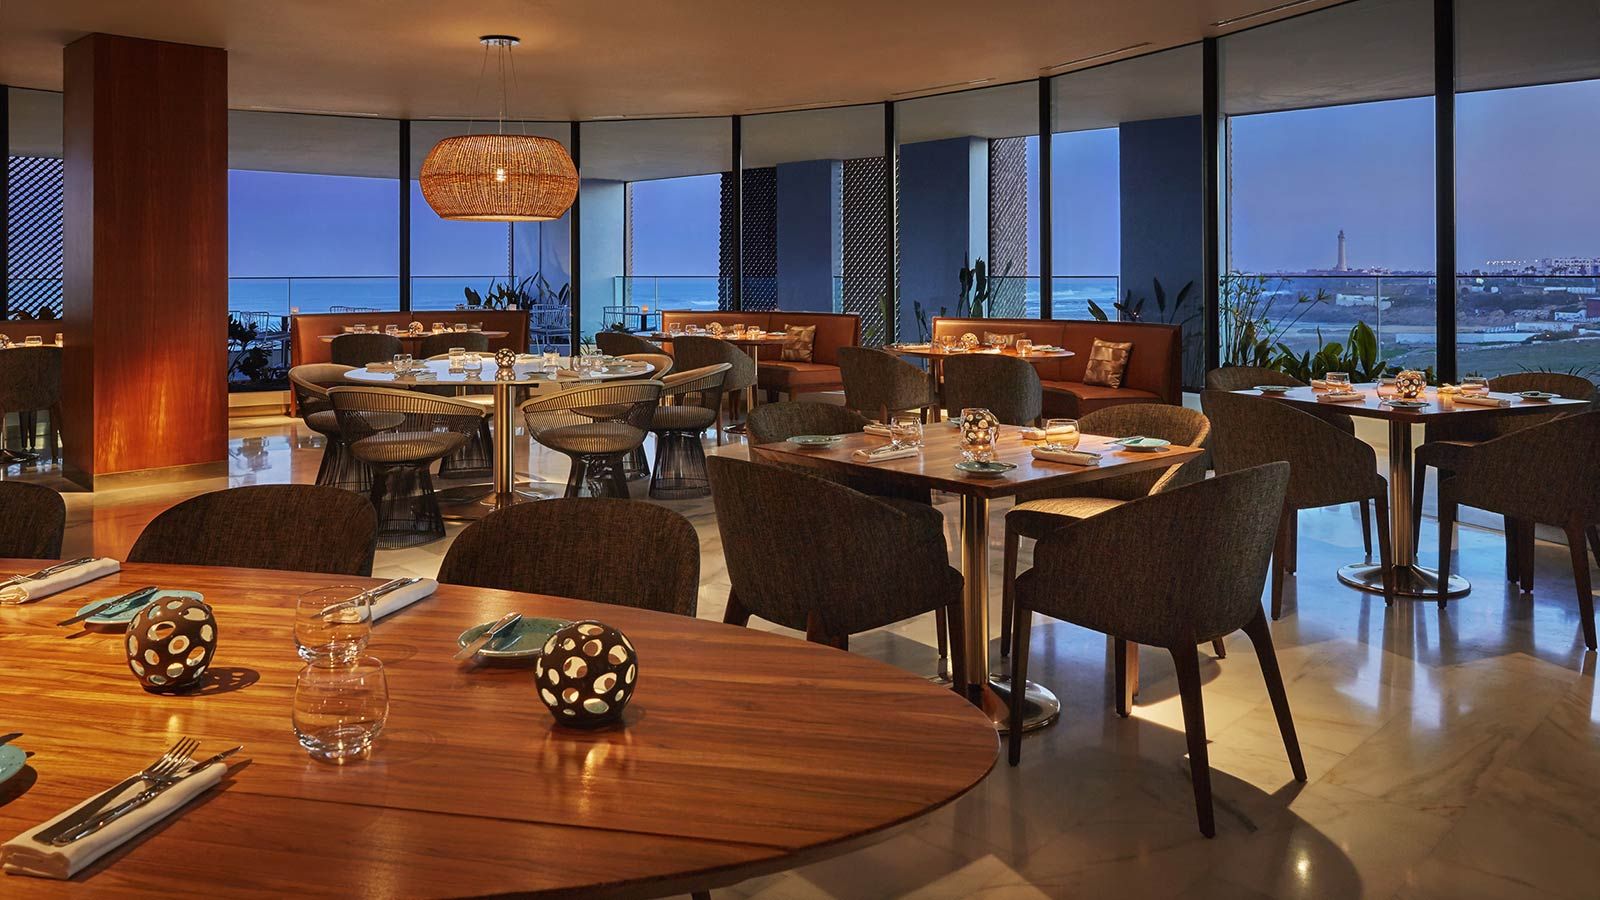 Casablanca Four Seasons Hotel, Modern Sea View Restaurant - Mace Group